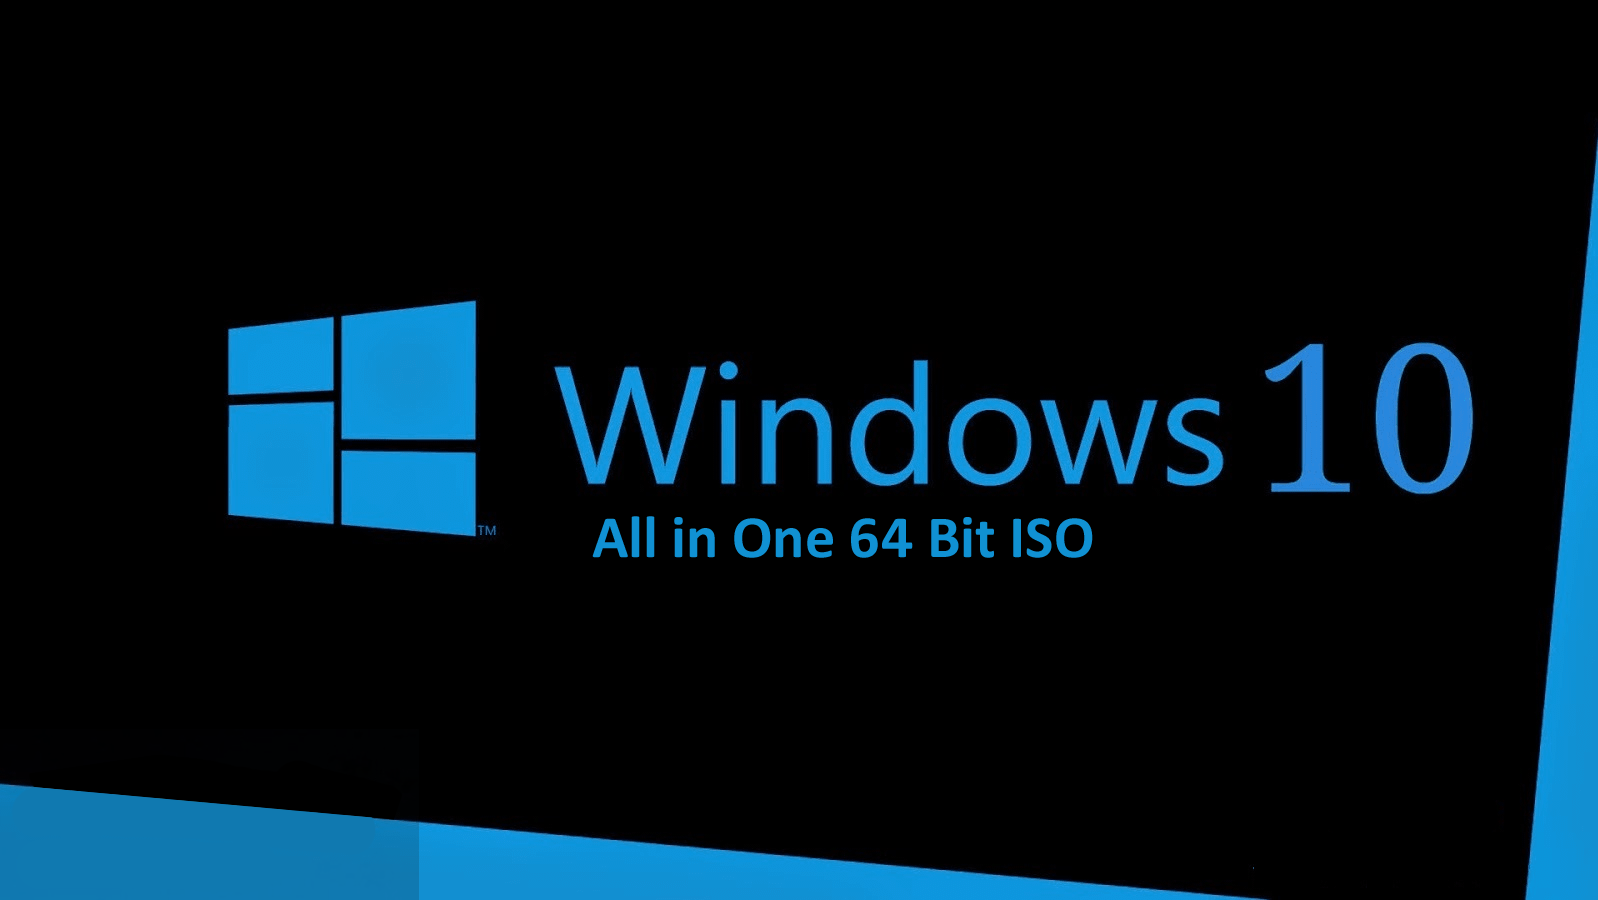 microsoft download windows 10 iso 64 bit